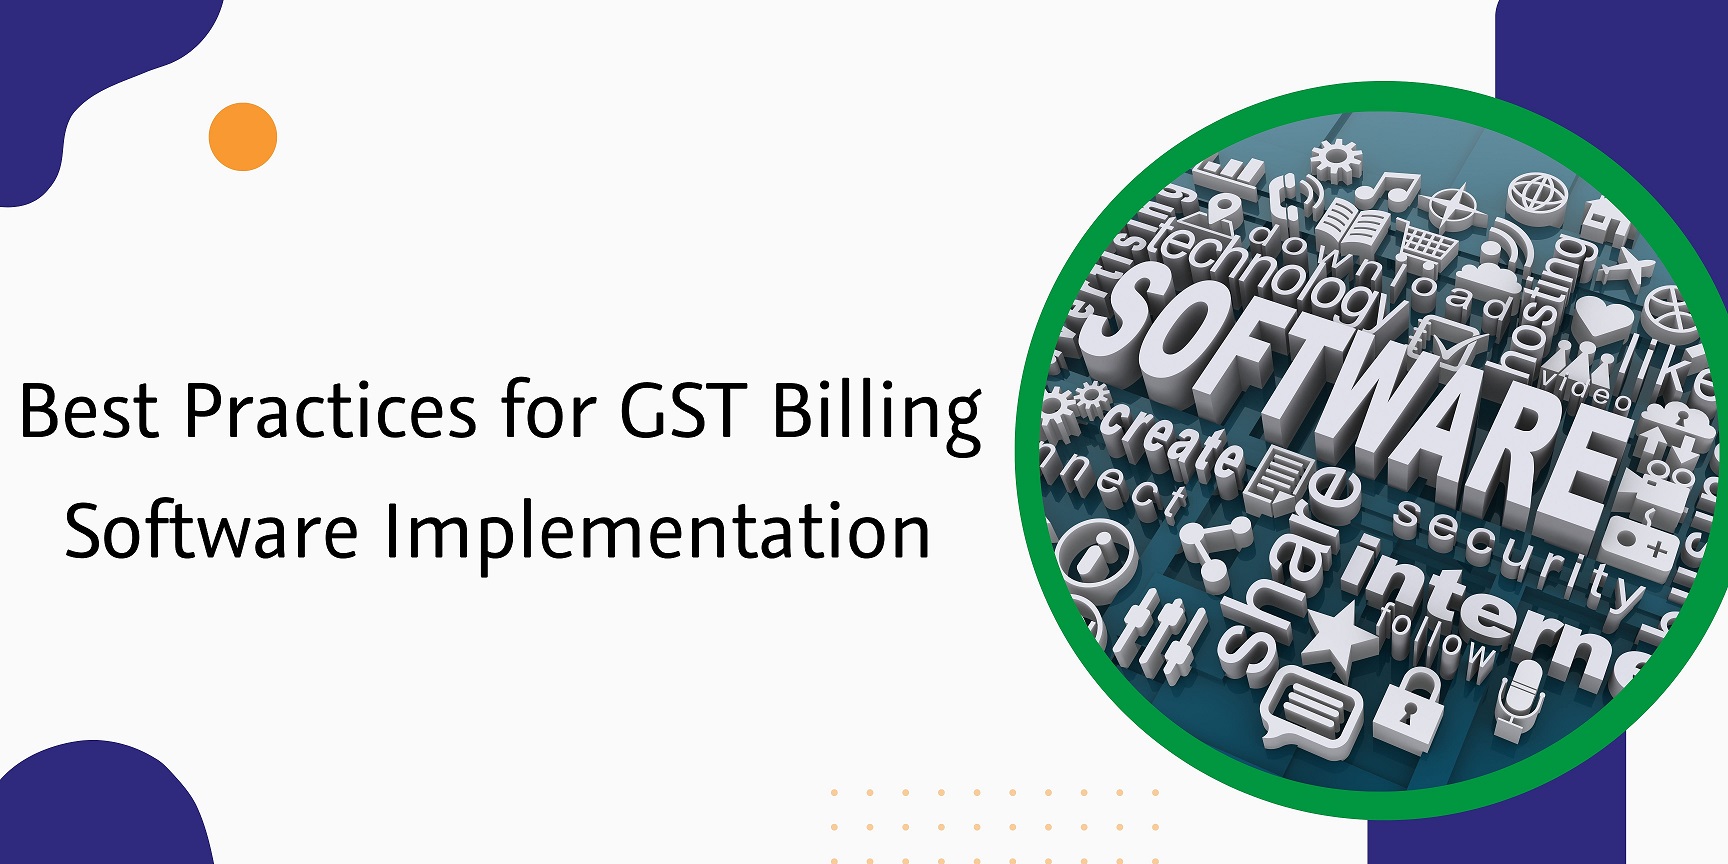 captainbiz best practices for gst billing software implementation